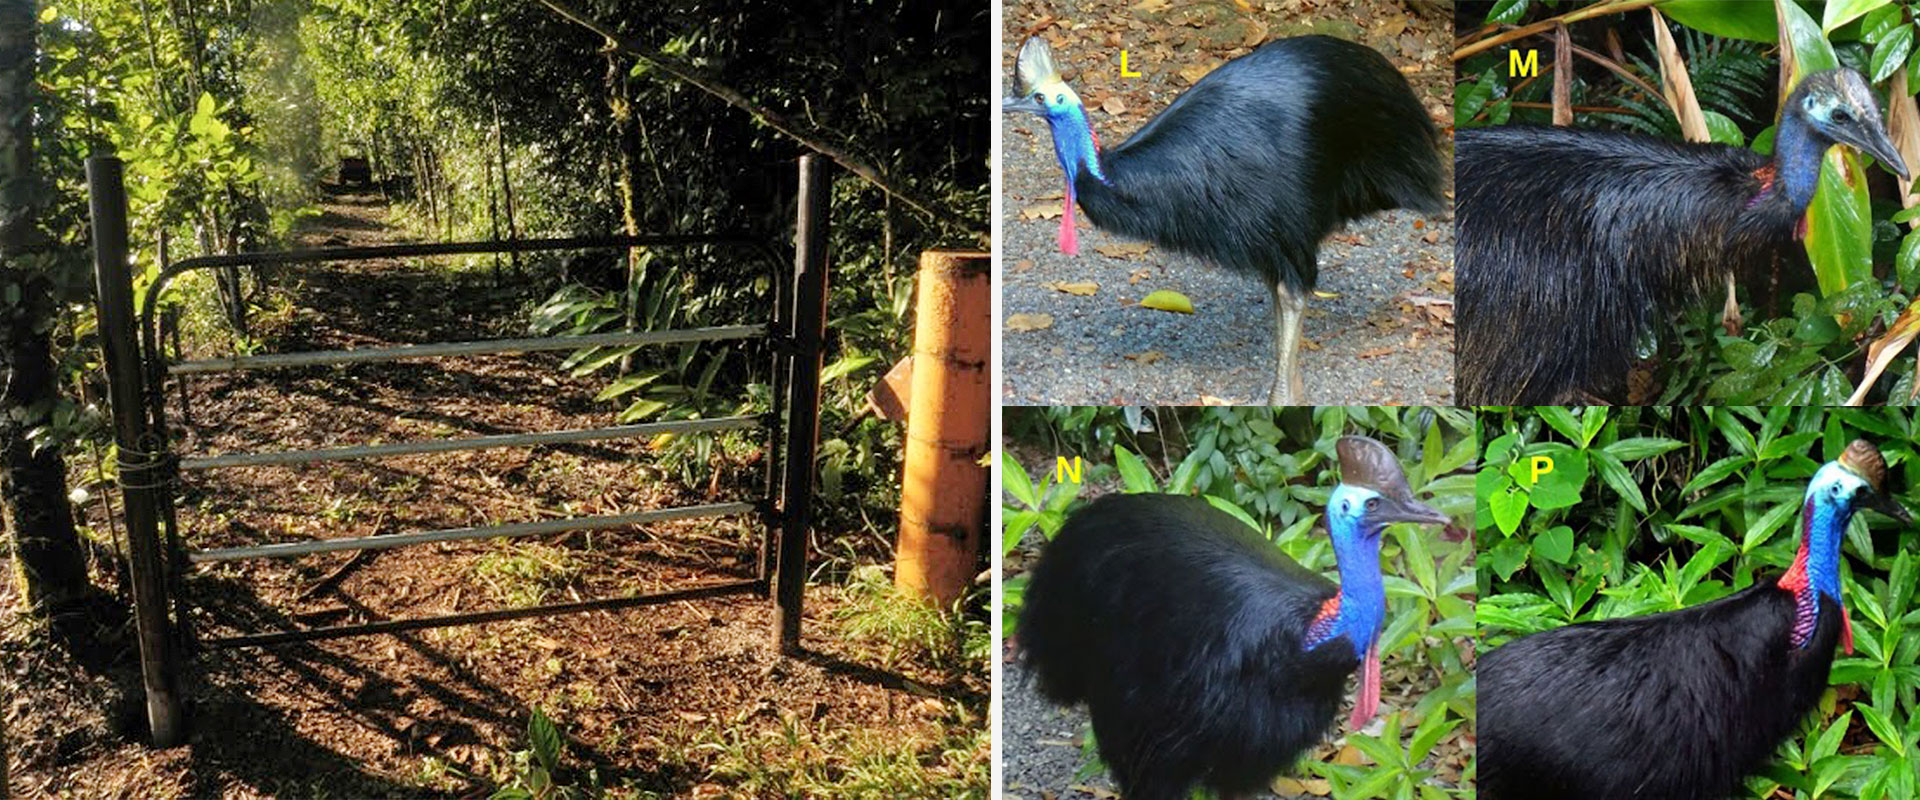 A cassowary gate allows birds to move through the rainforest without impediment. Four of the twenty three cassowaries seen at Wairambar Rainforest.